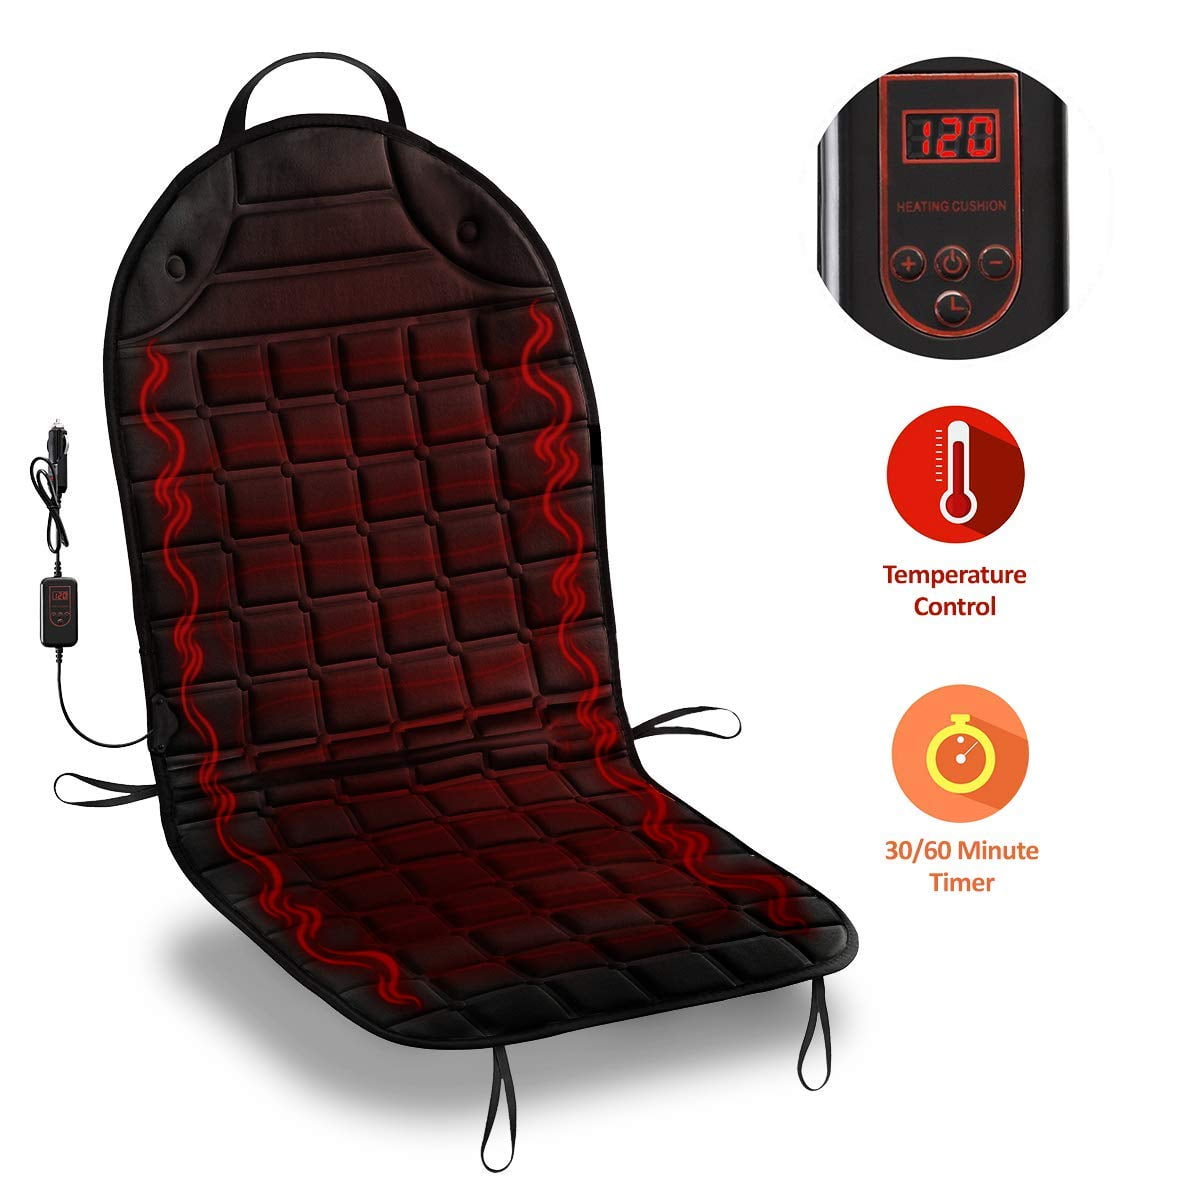 Xljh Car Auto Seat Heated Seat Cushion Warmer Pad Heating Pad Heating Mats Non-Slip Knitting Fiber Winter Protective Auto Covers 1pc